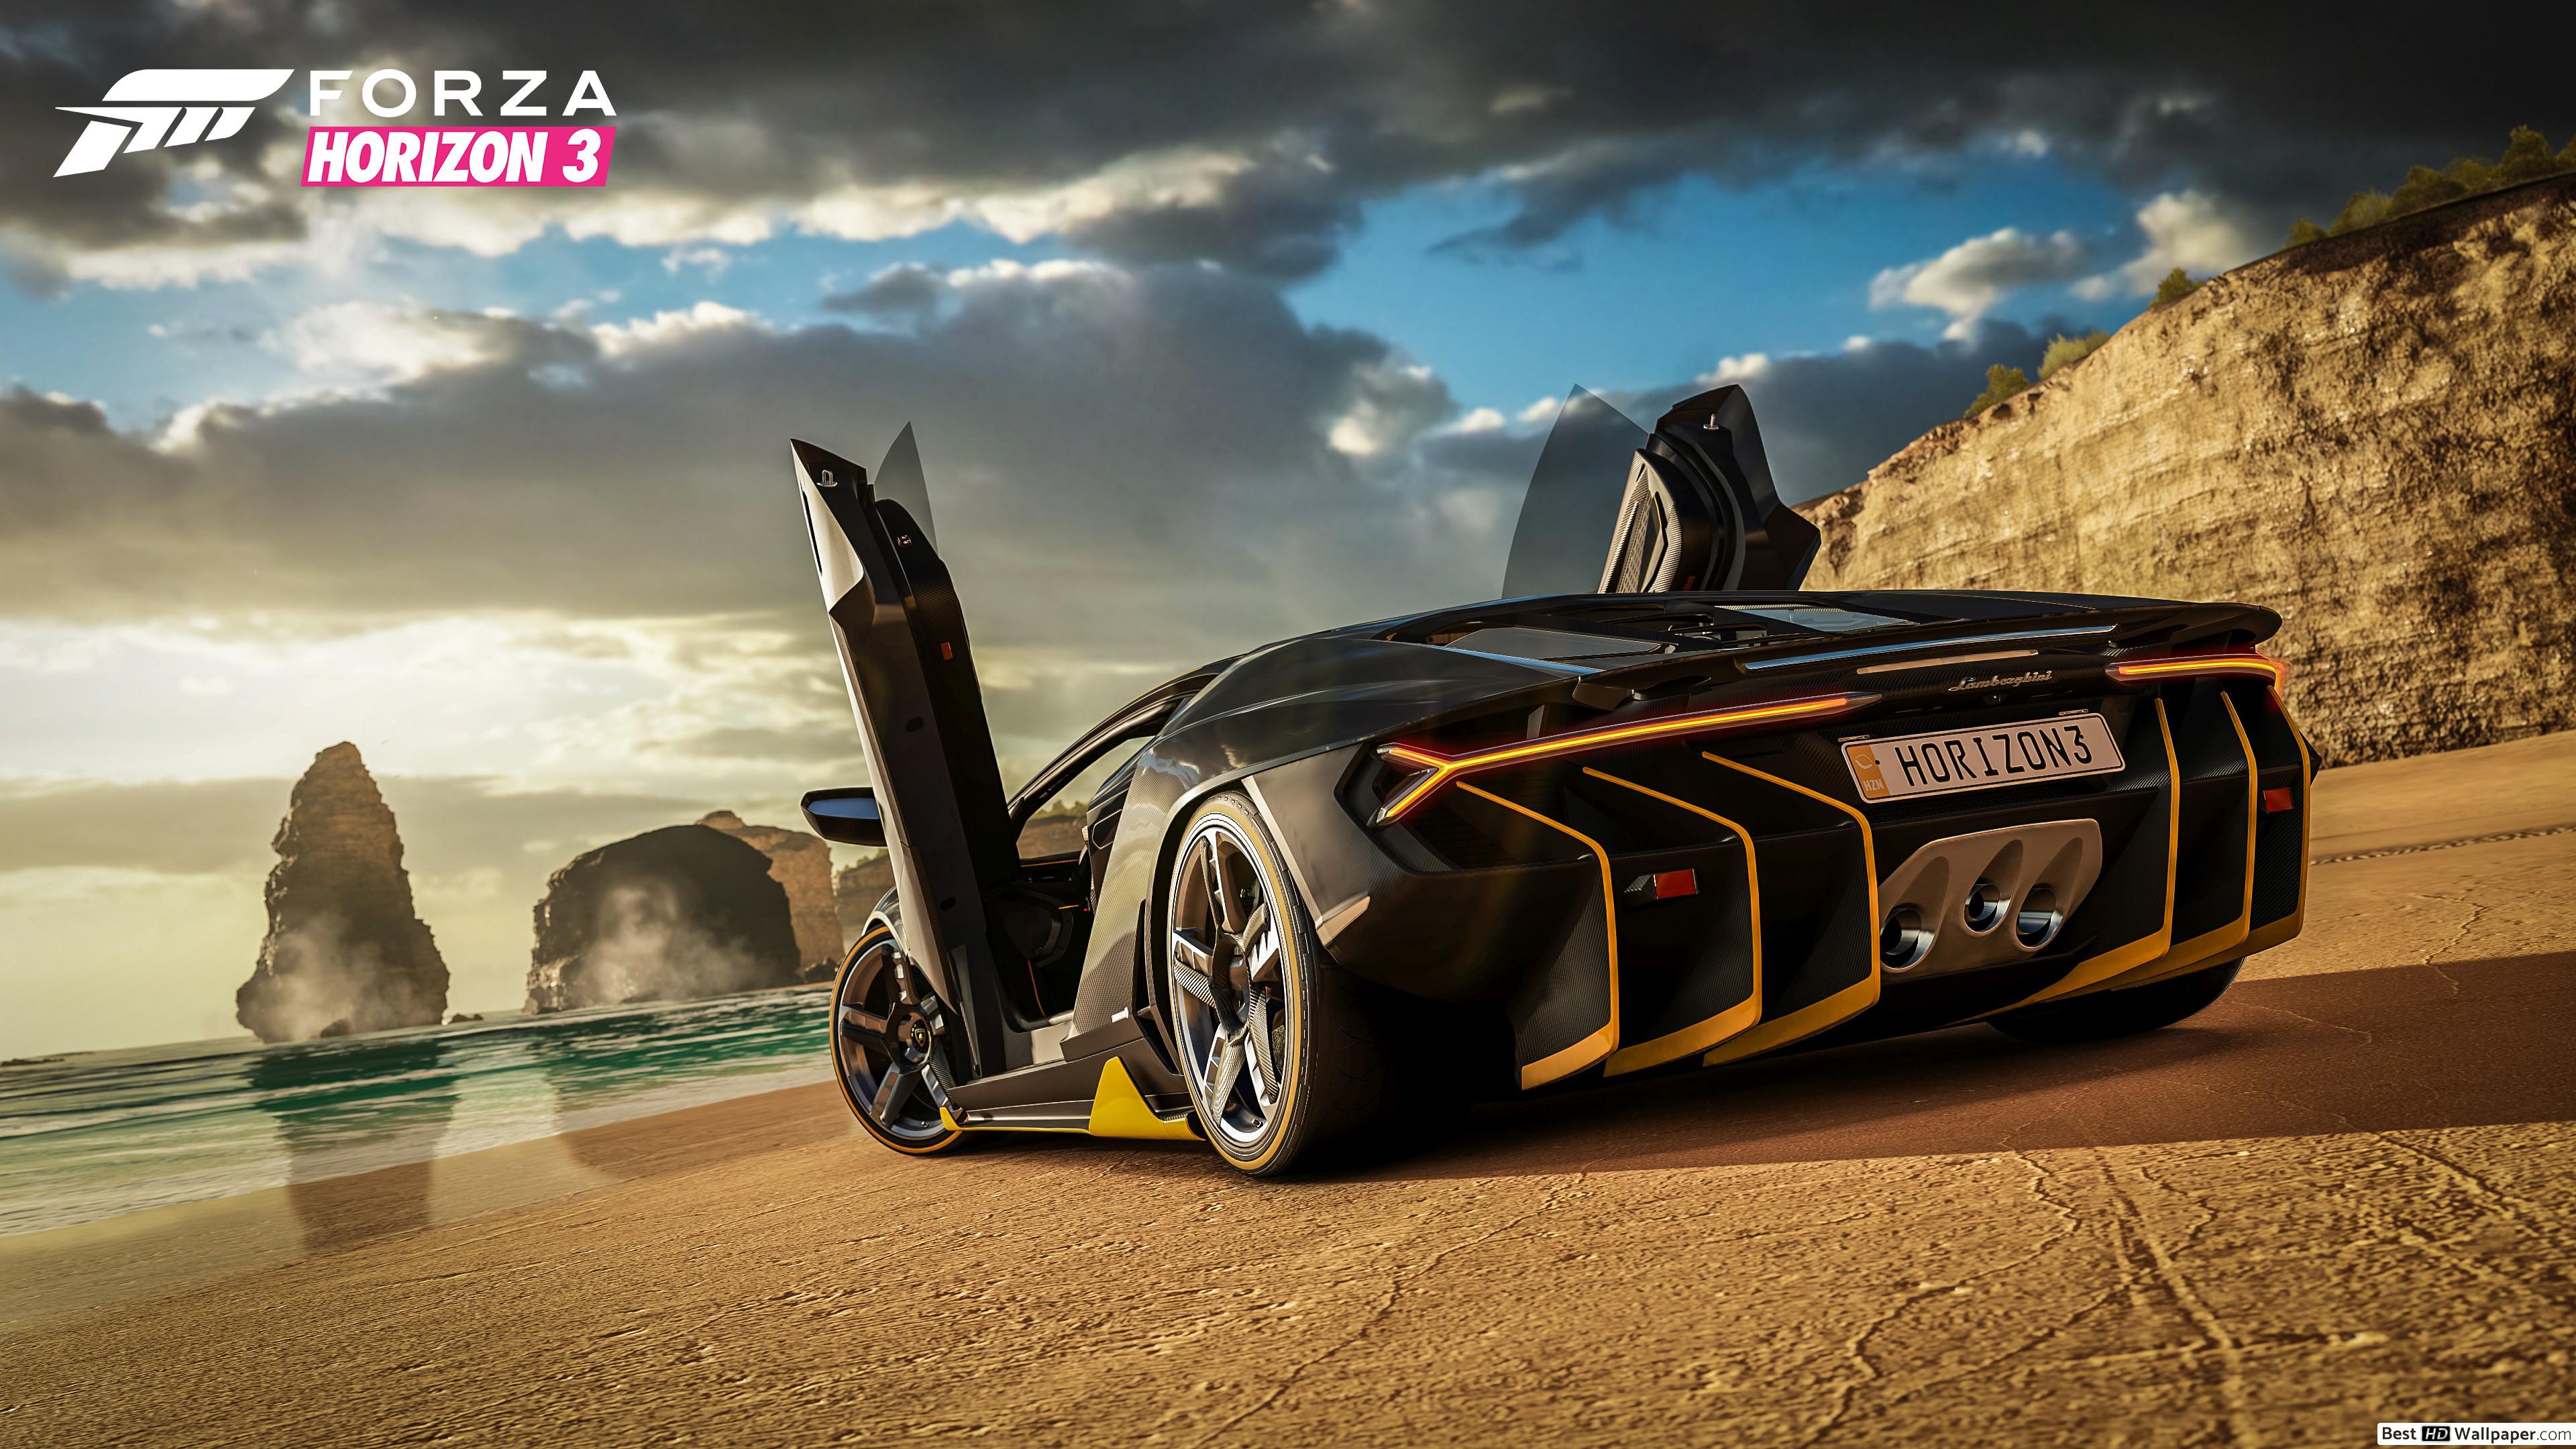 Forza Horizon 3 game (racing car) HD wallpaper download